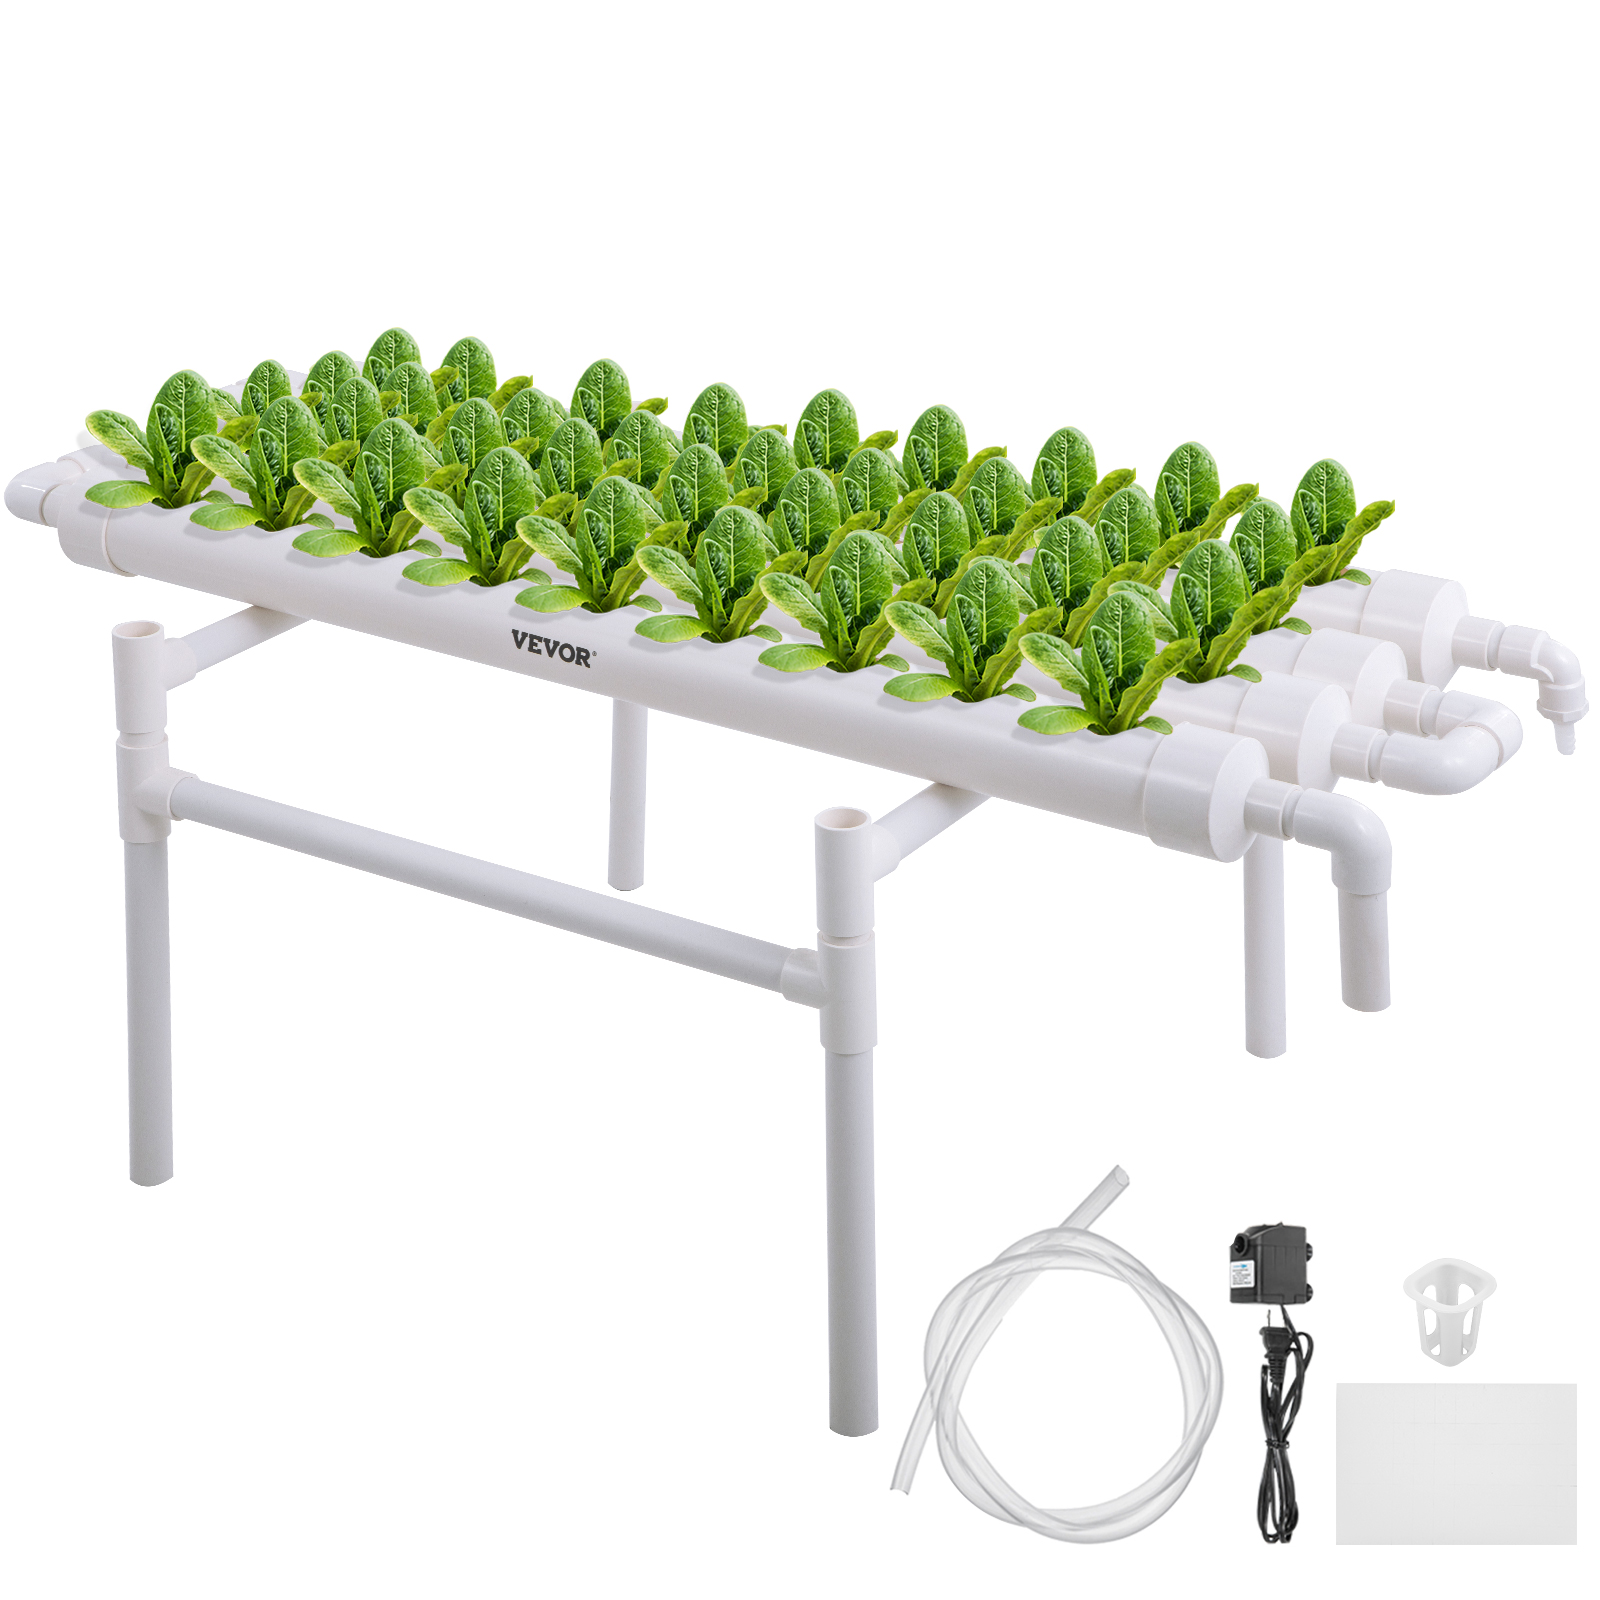 Hydroponic Grow Kit 36 Sites 4 Pipes Melon Garden System Vegetable Gardening Diy от Vevor Many GEOs